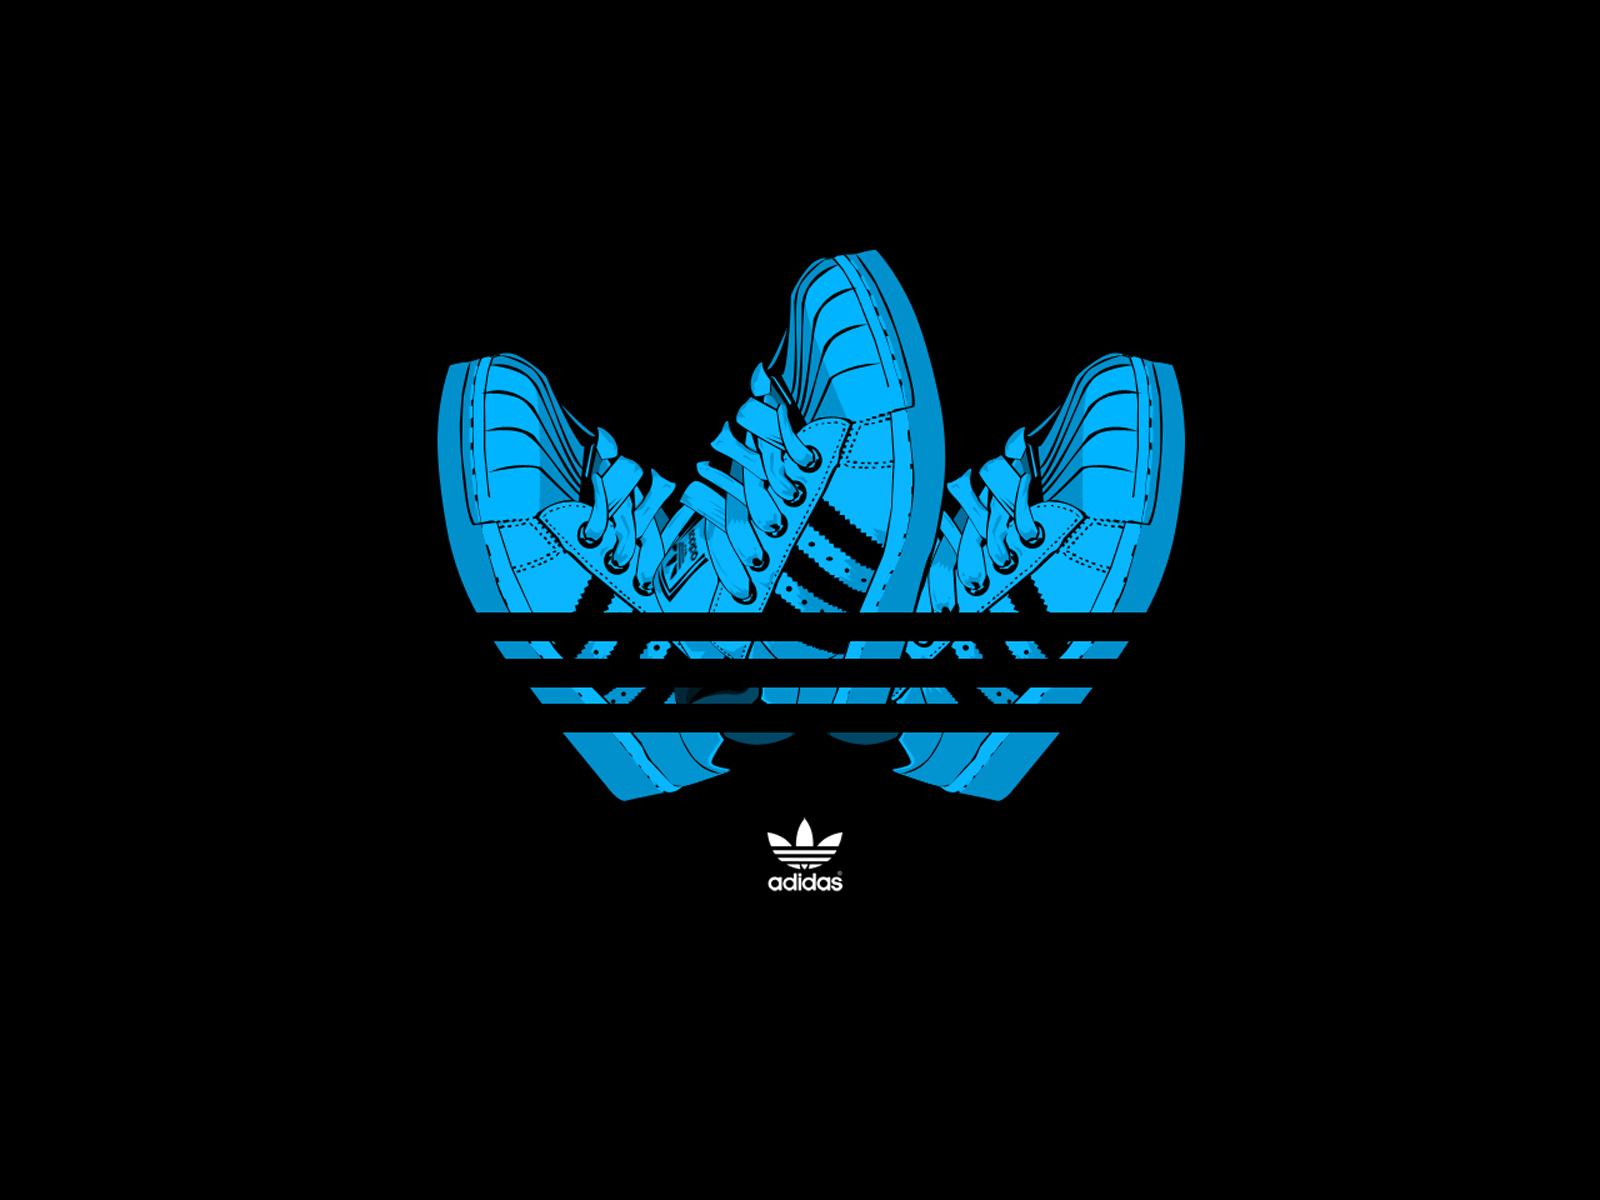 Adidas, Sport, logo, wallpaper desktop background